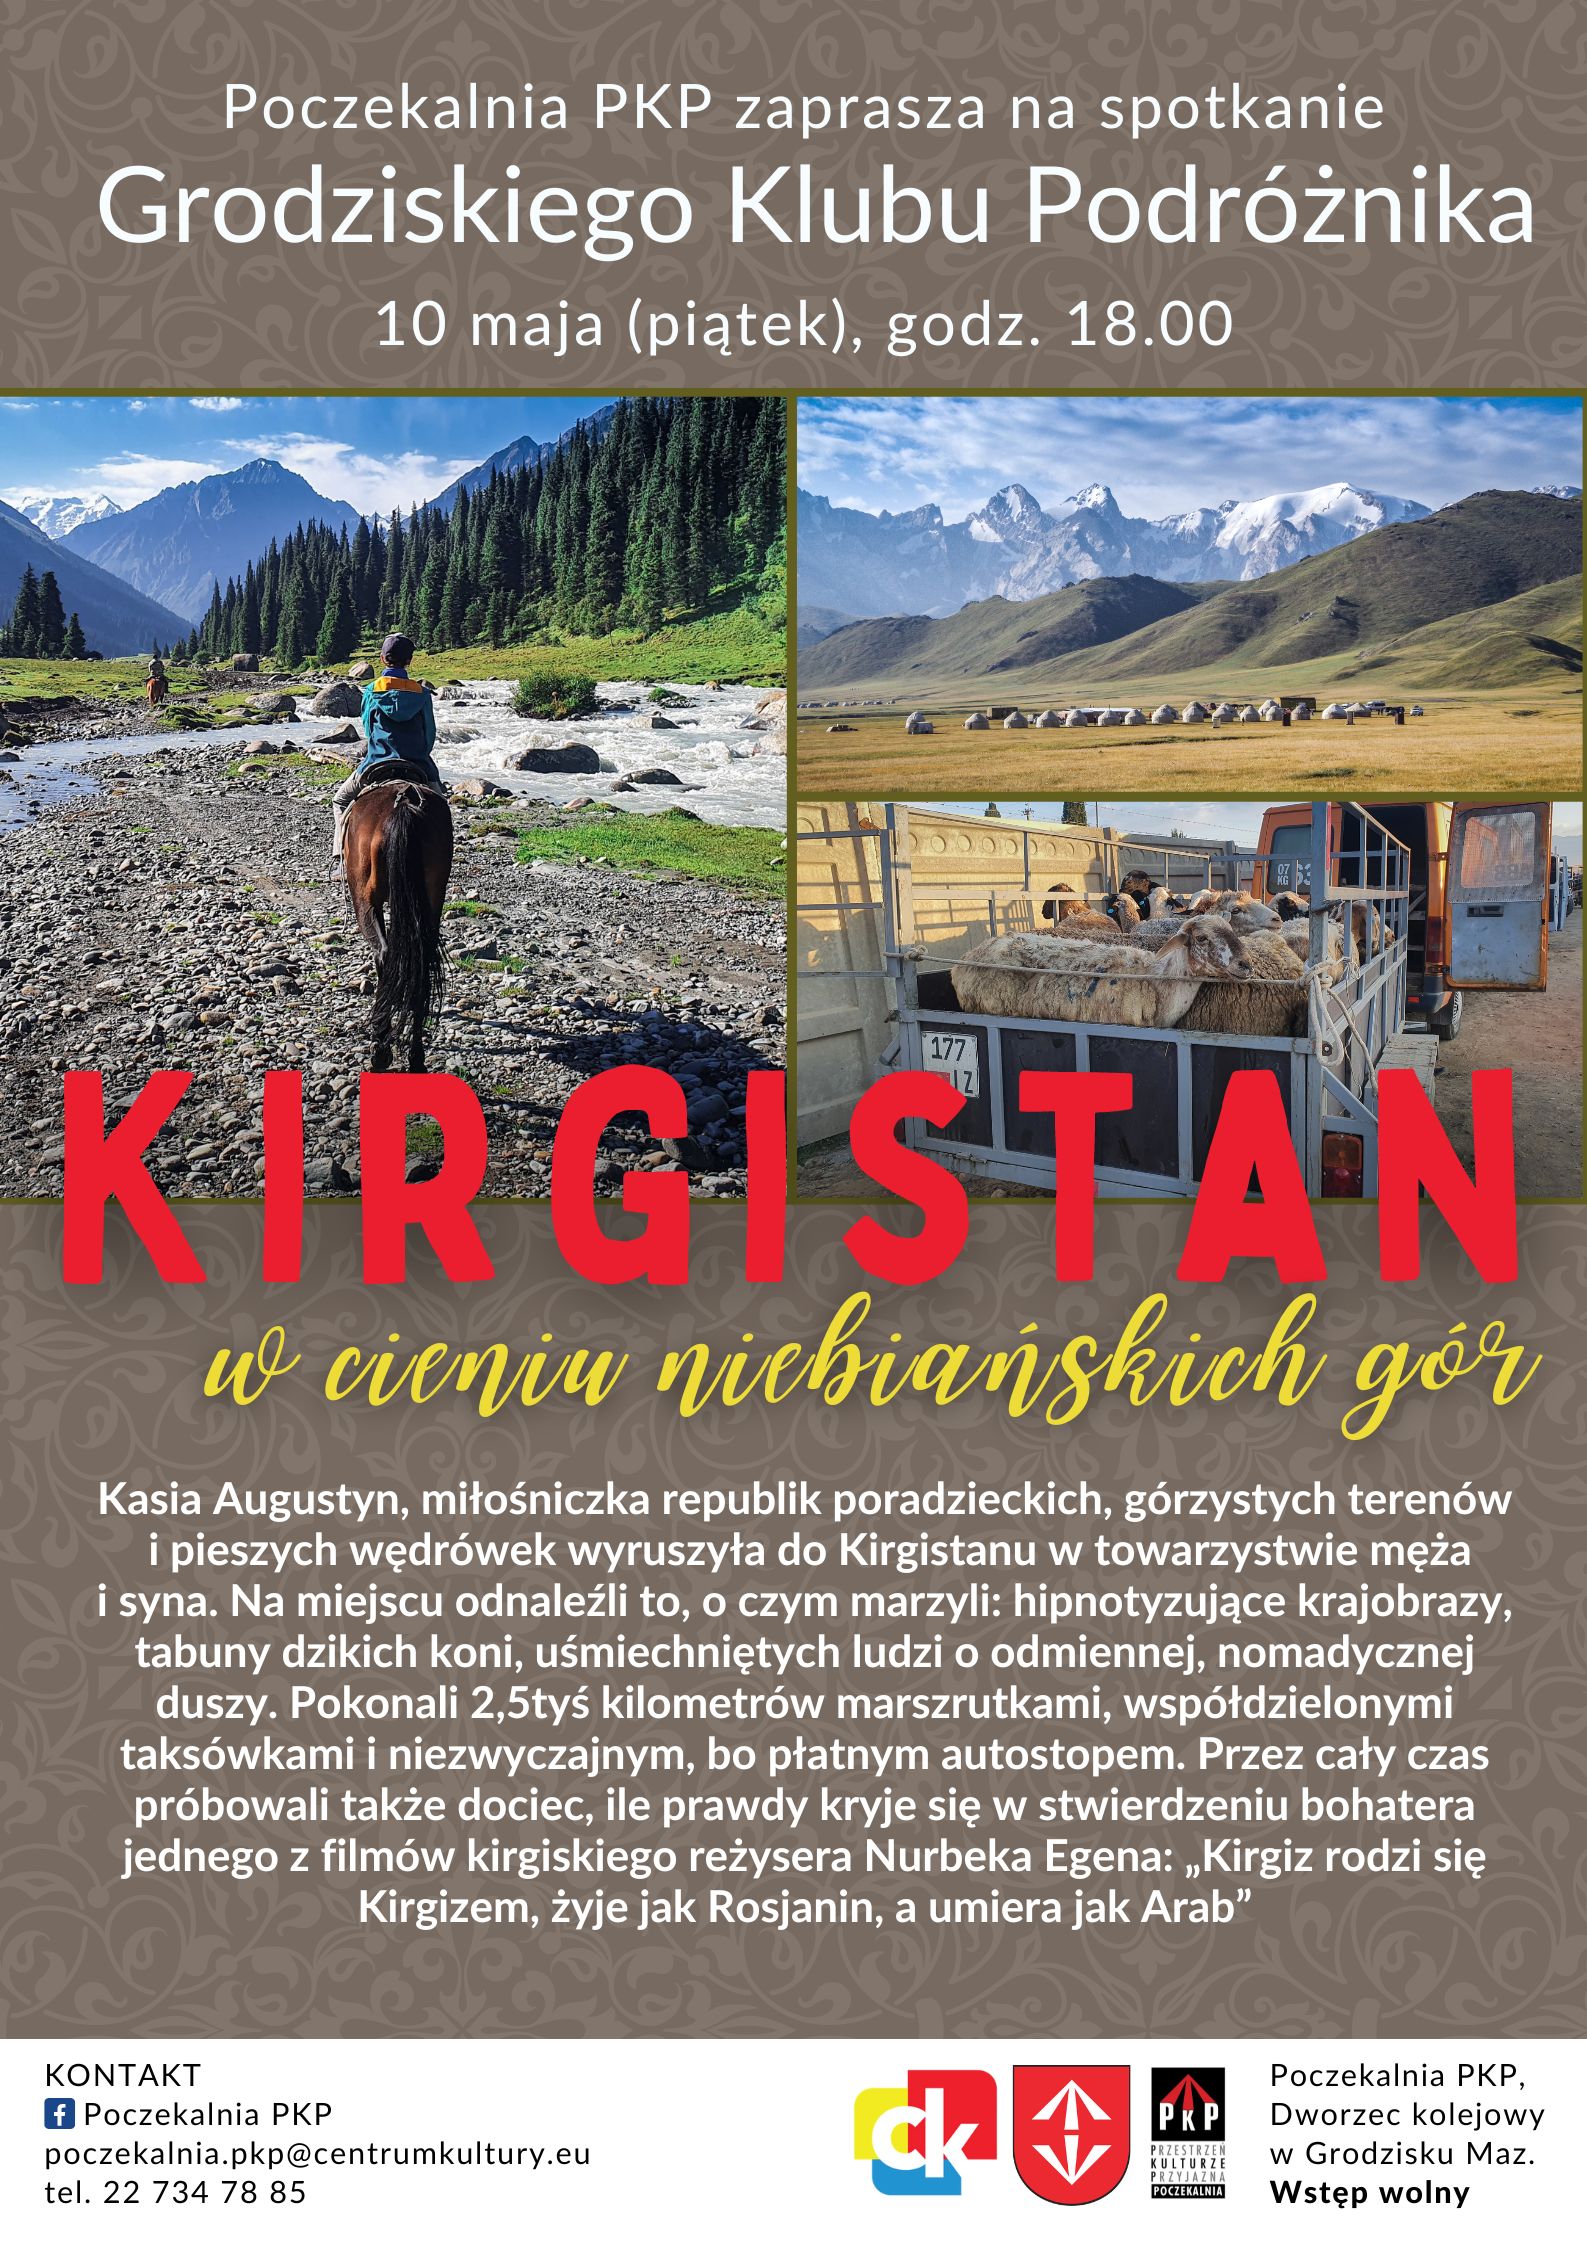 Grodziski Klub Podróżnika - Kirigistan